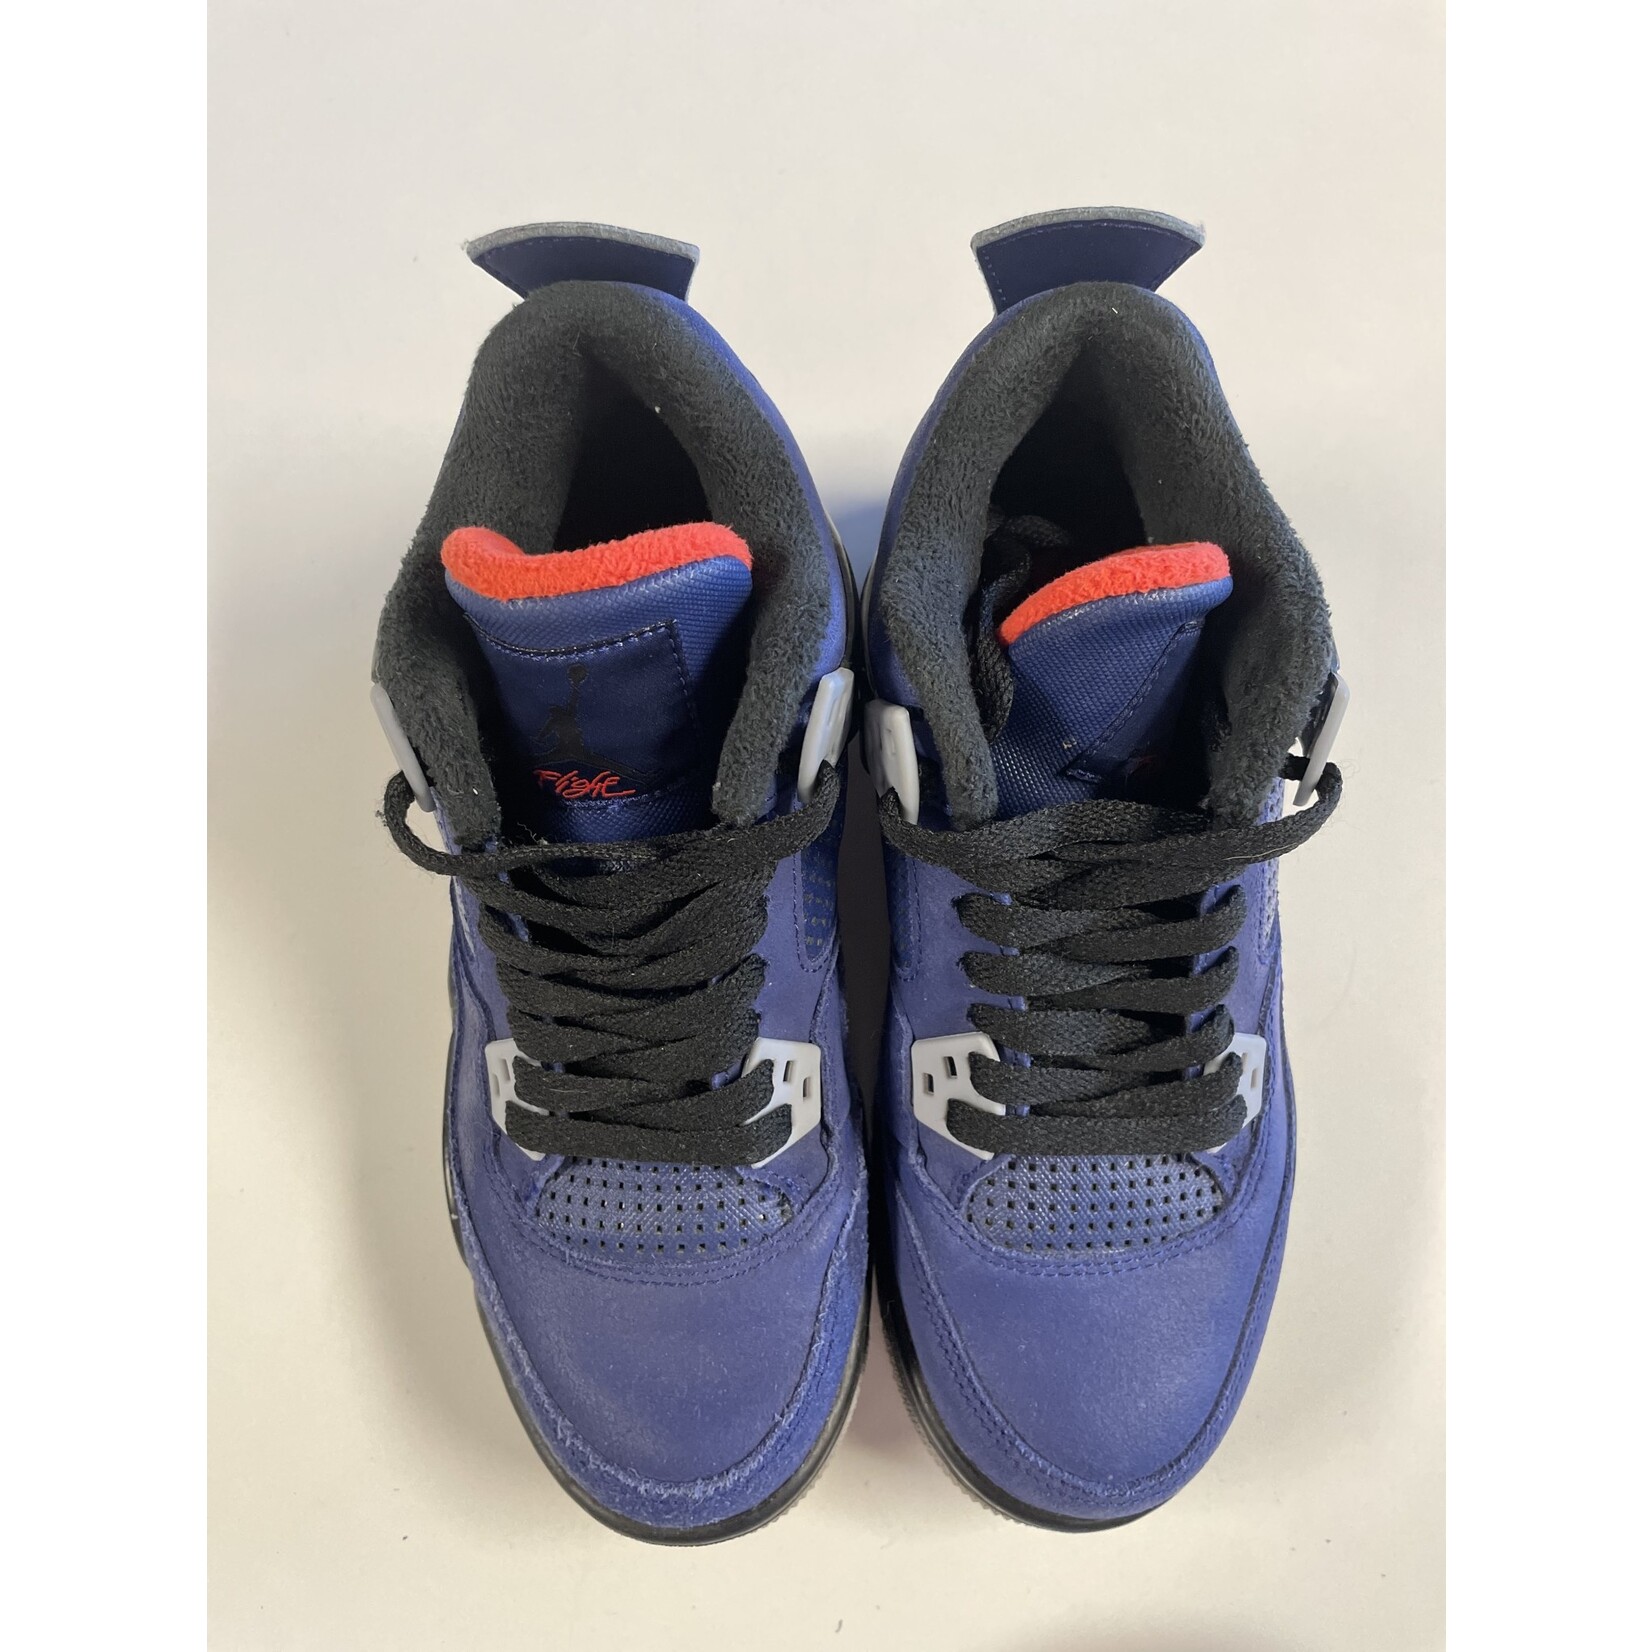 Nike, Jordan Retro 4, Loyal Blue, 5.5 Youth